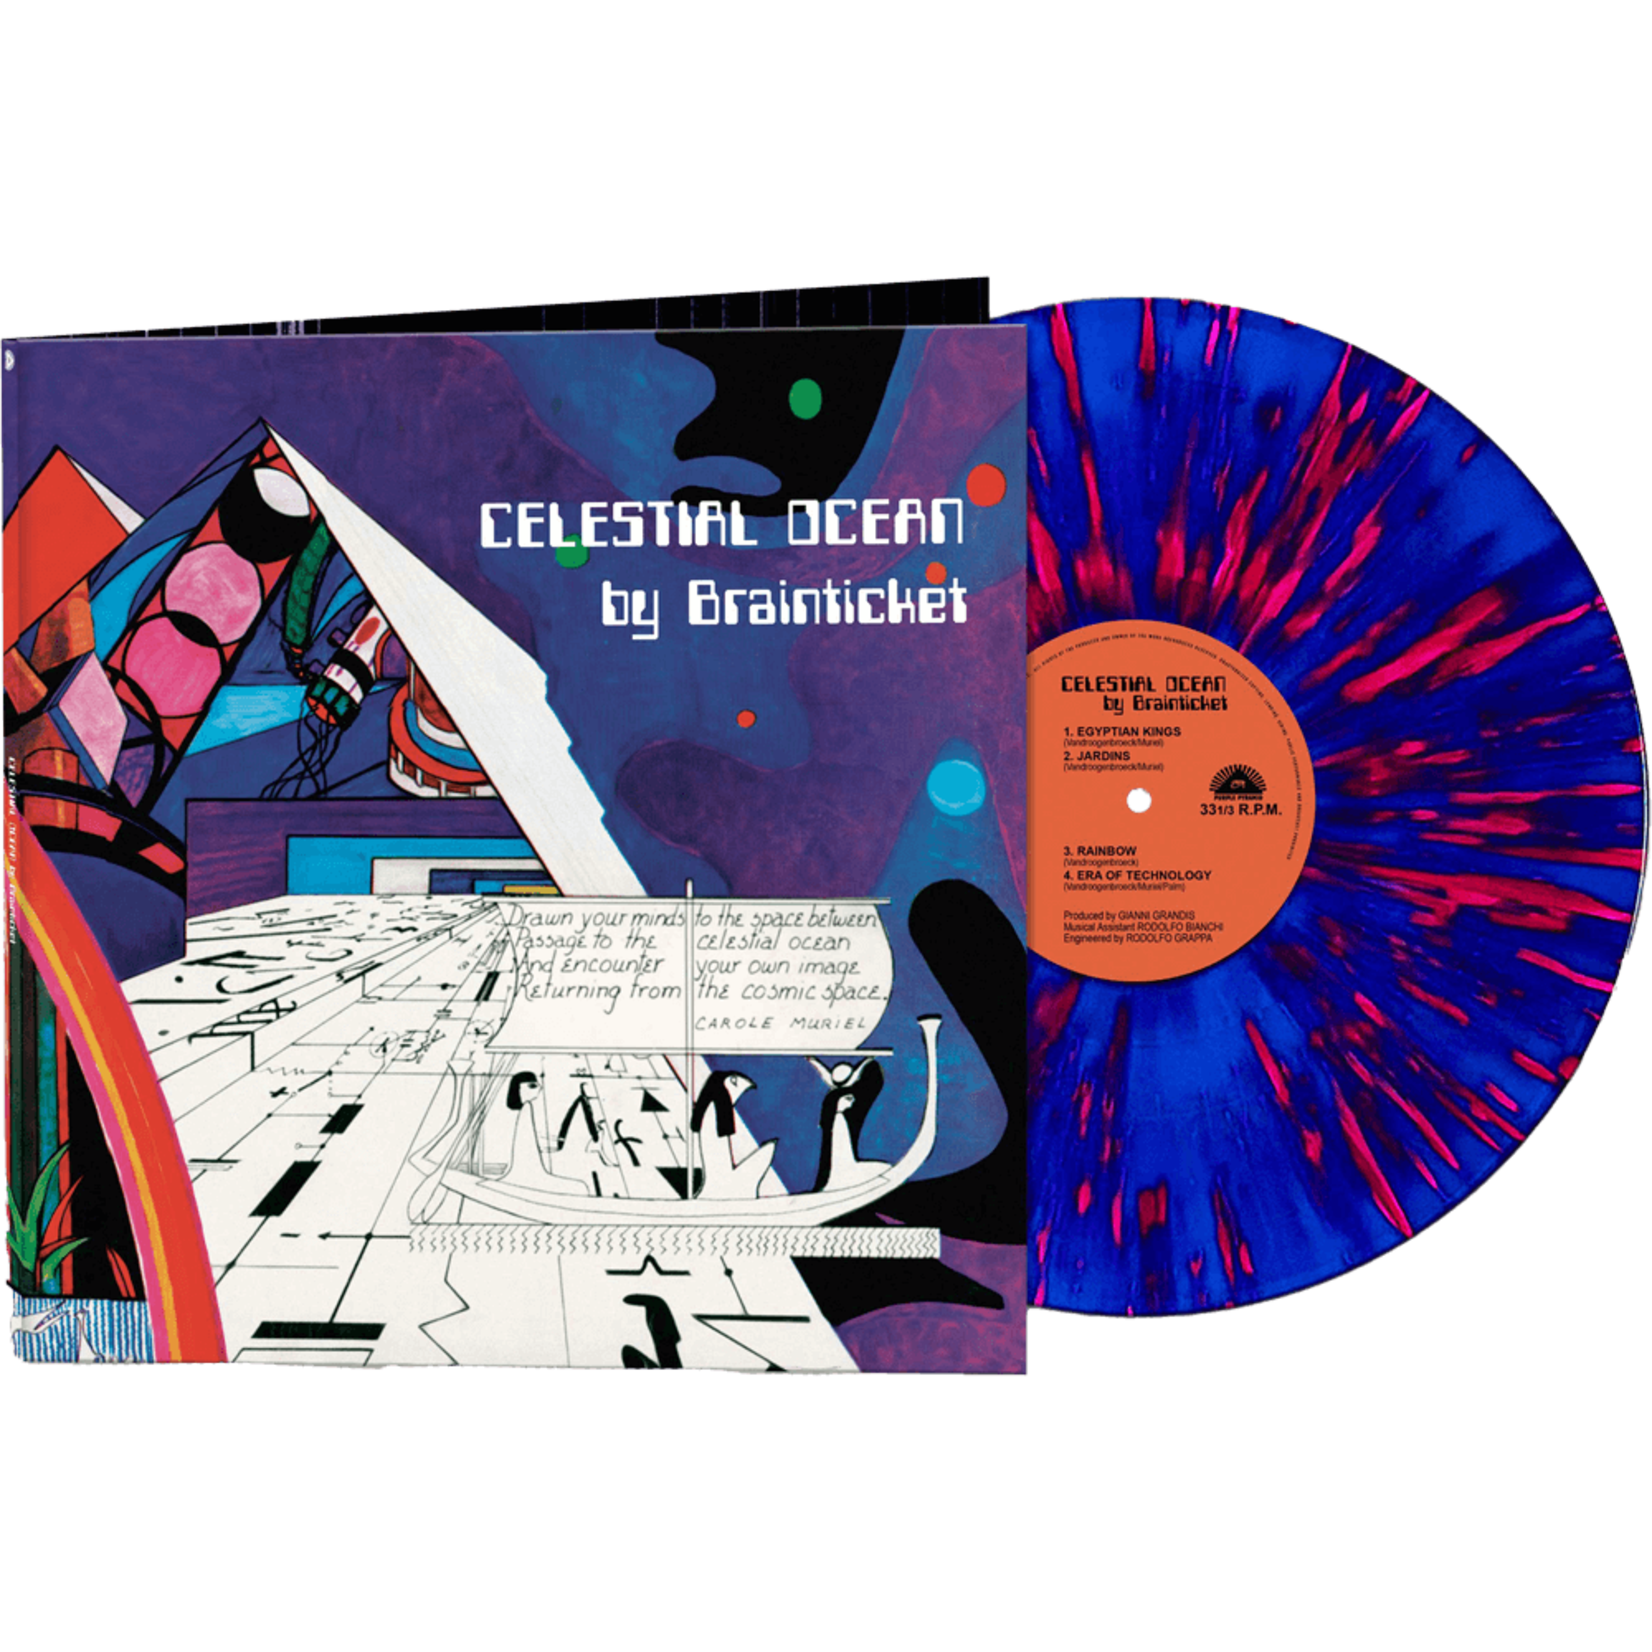 [New] Brainticket - Celestial Ocean (blue vinyl with red splatter)